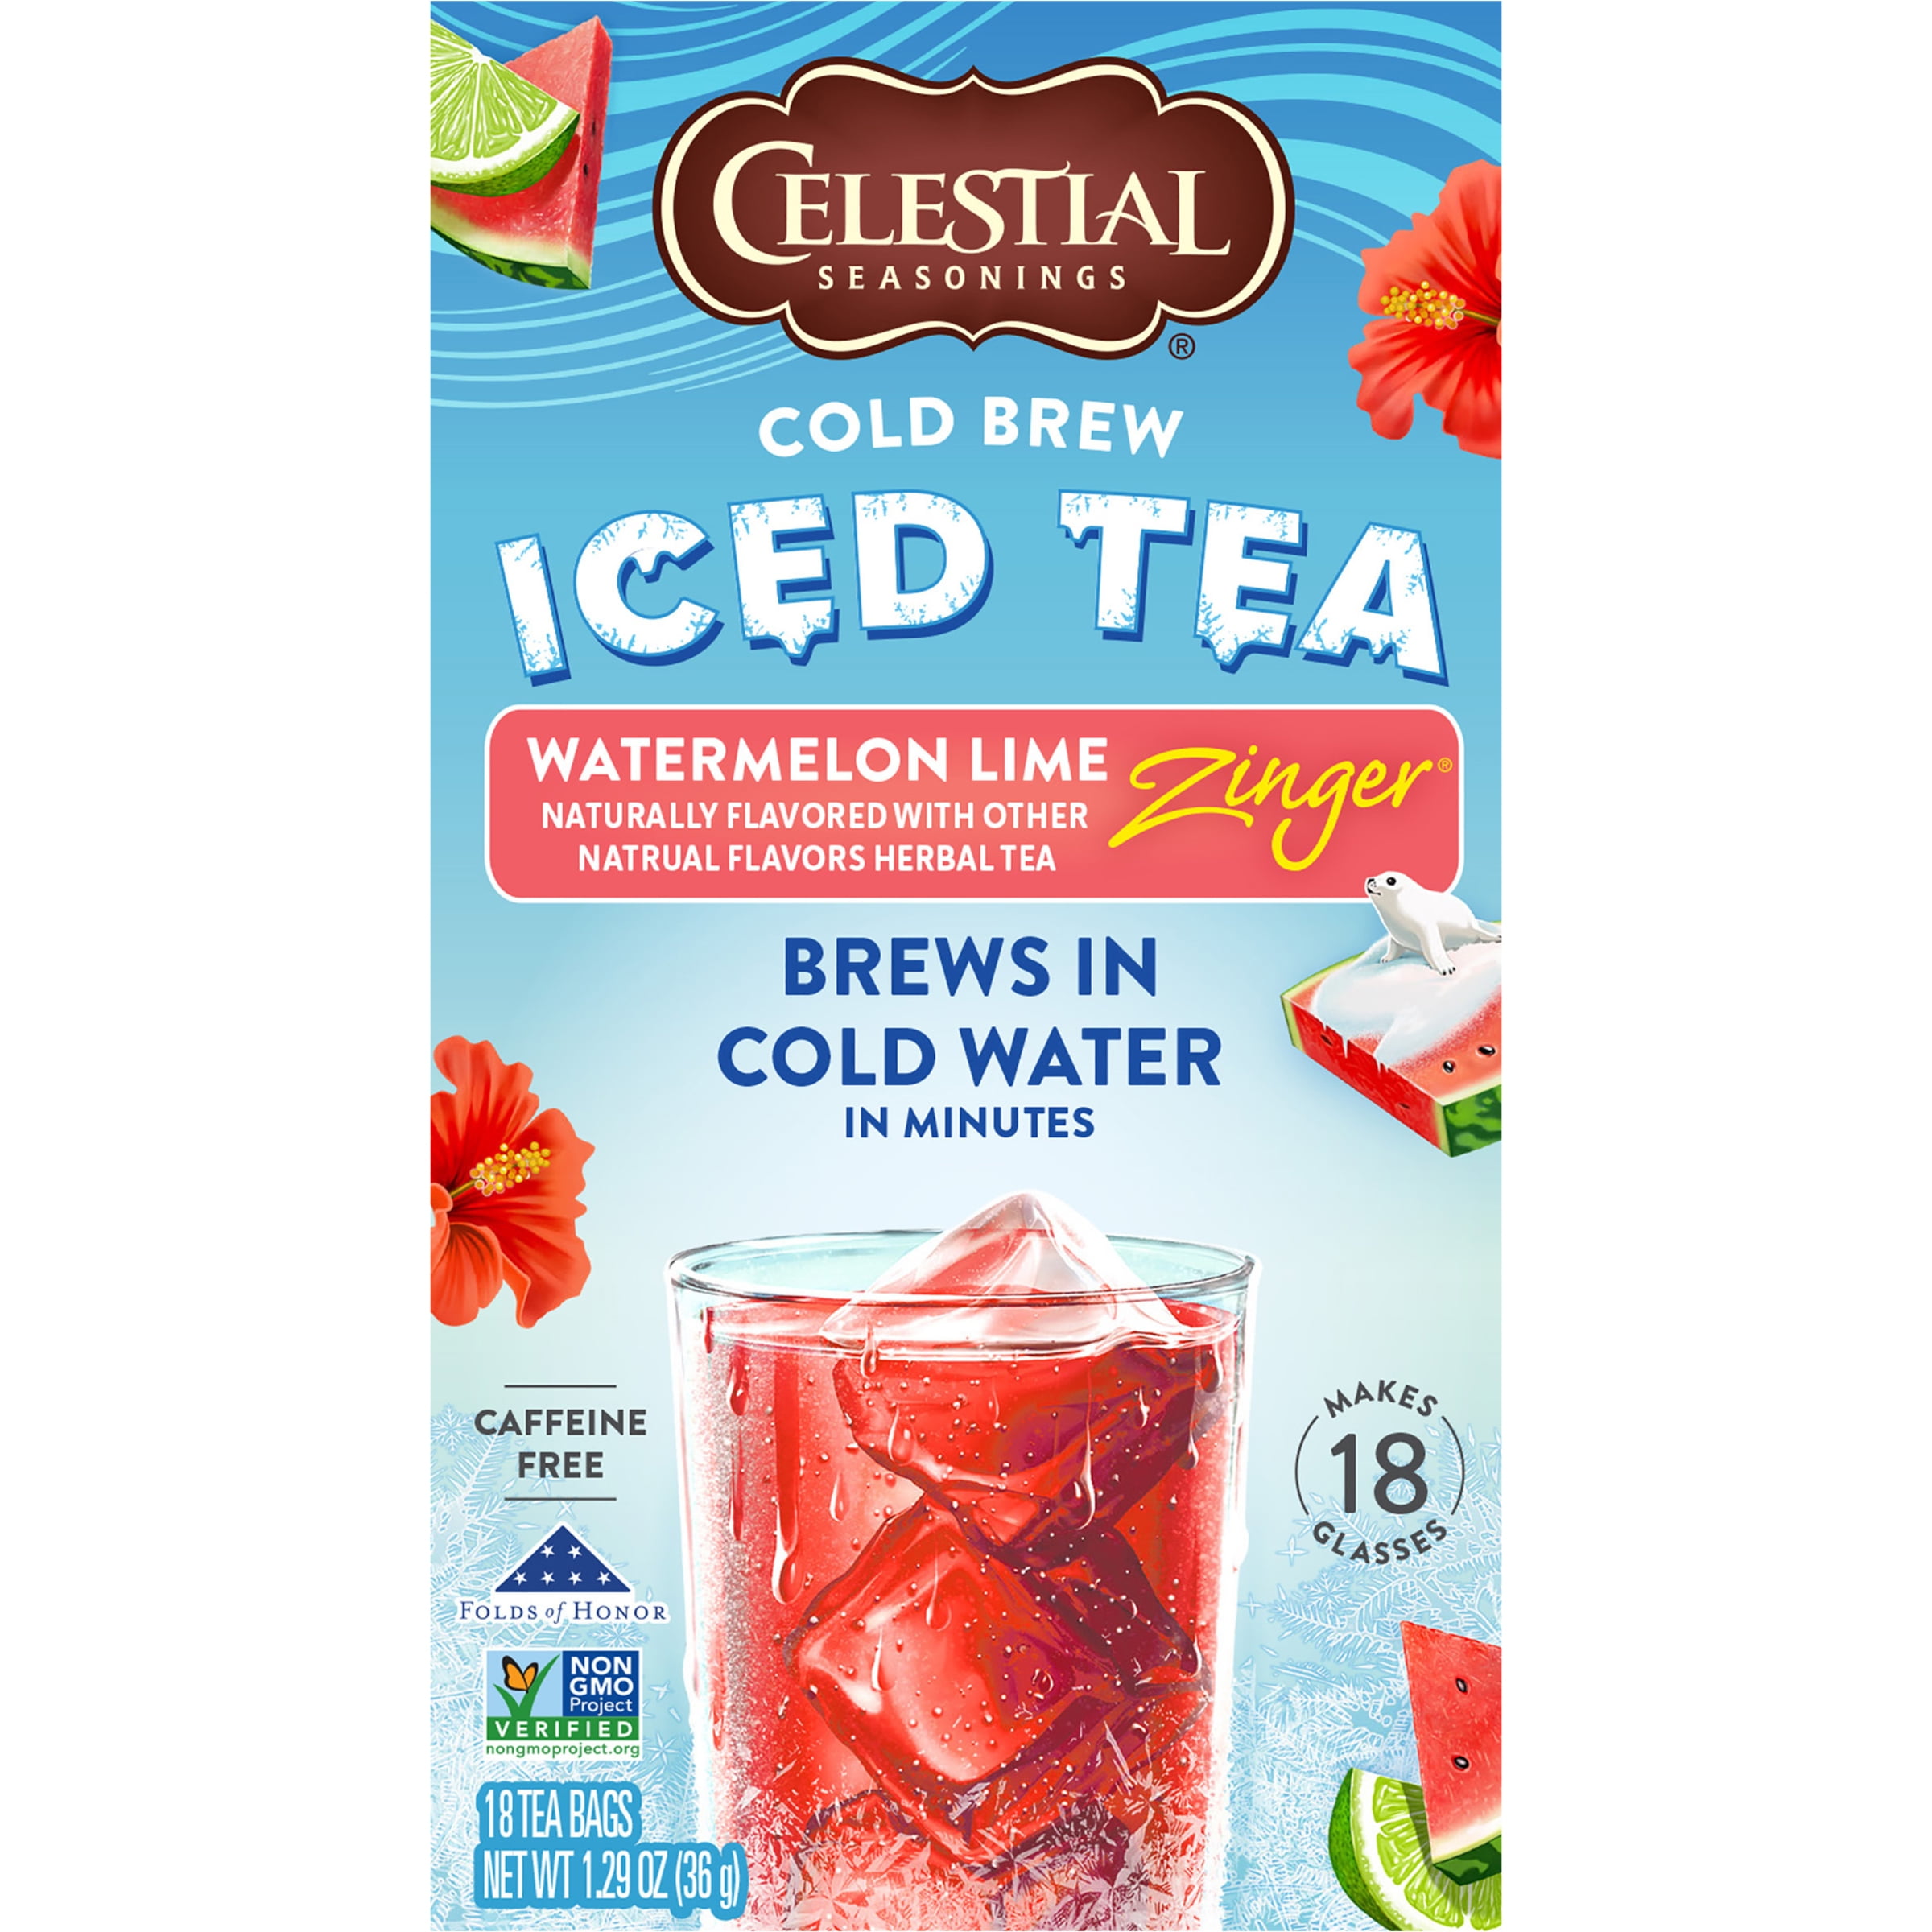 Celestial Seasonings Cold Brew Iced Tea Watermelon Lime Zinger ...